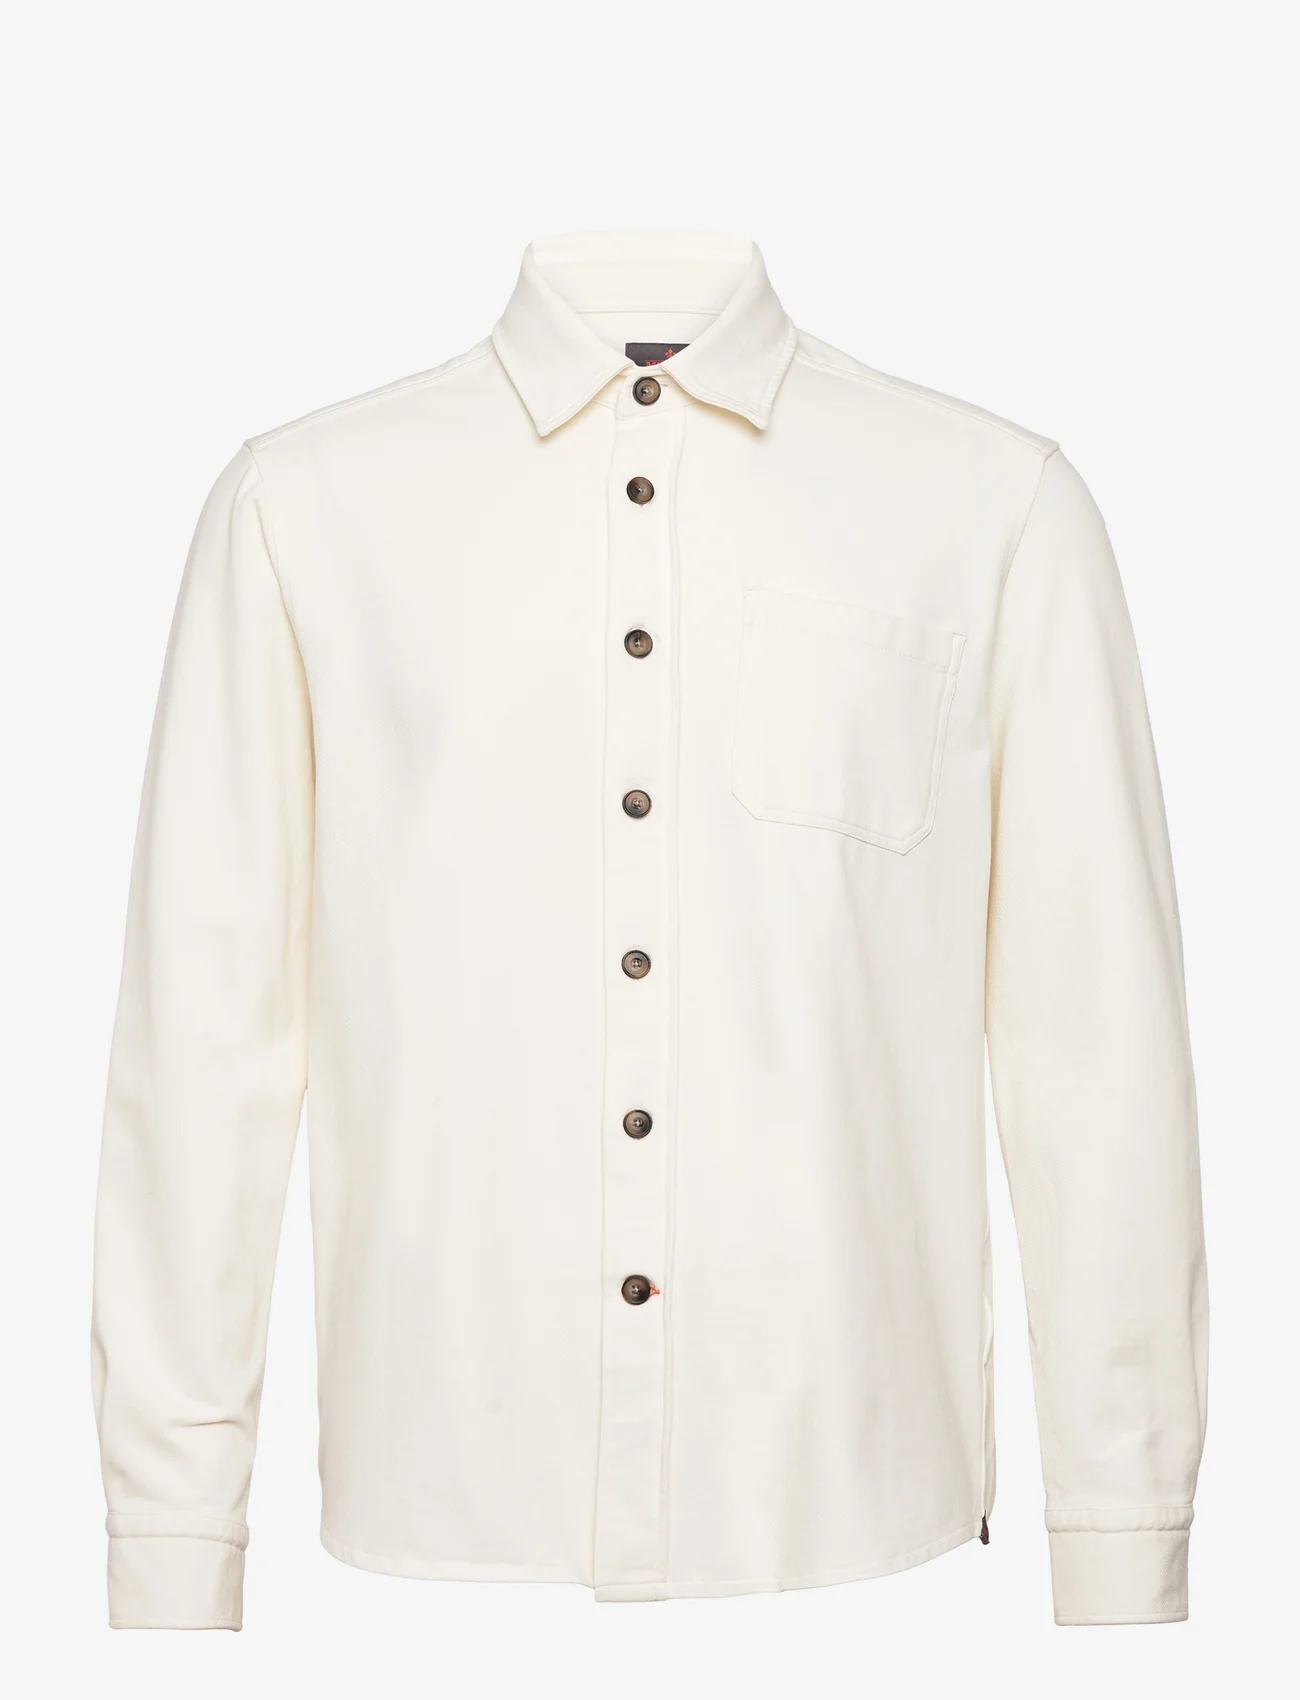 Morris - Jersey Overshirt - herren - off white - 0